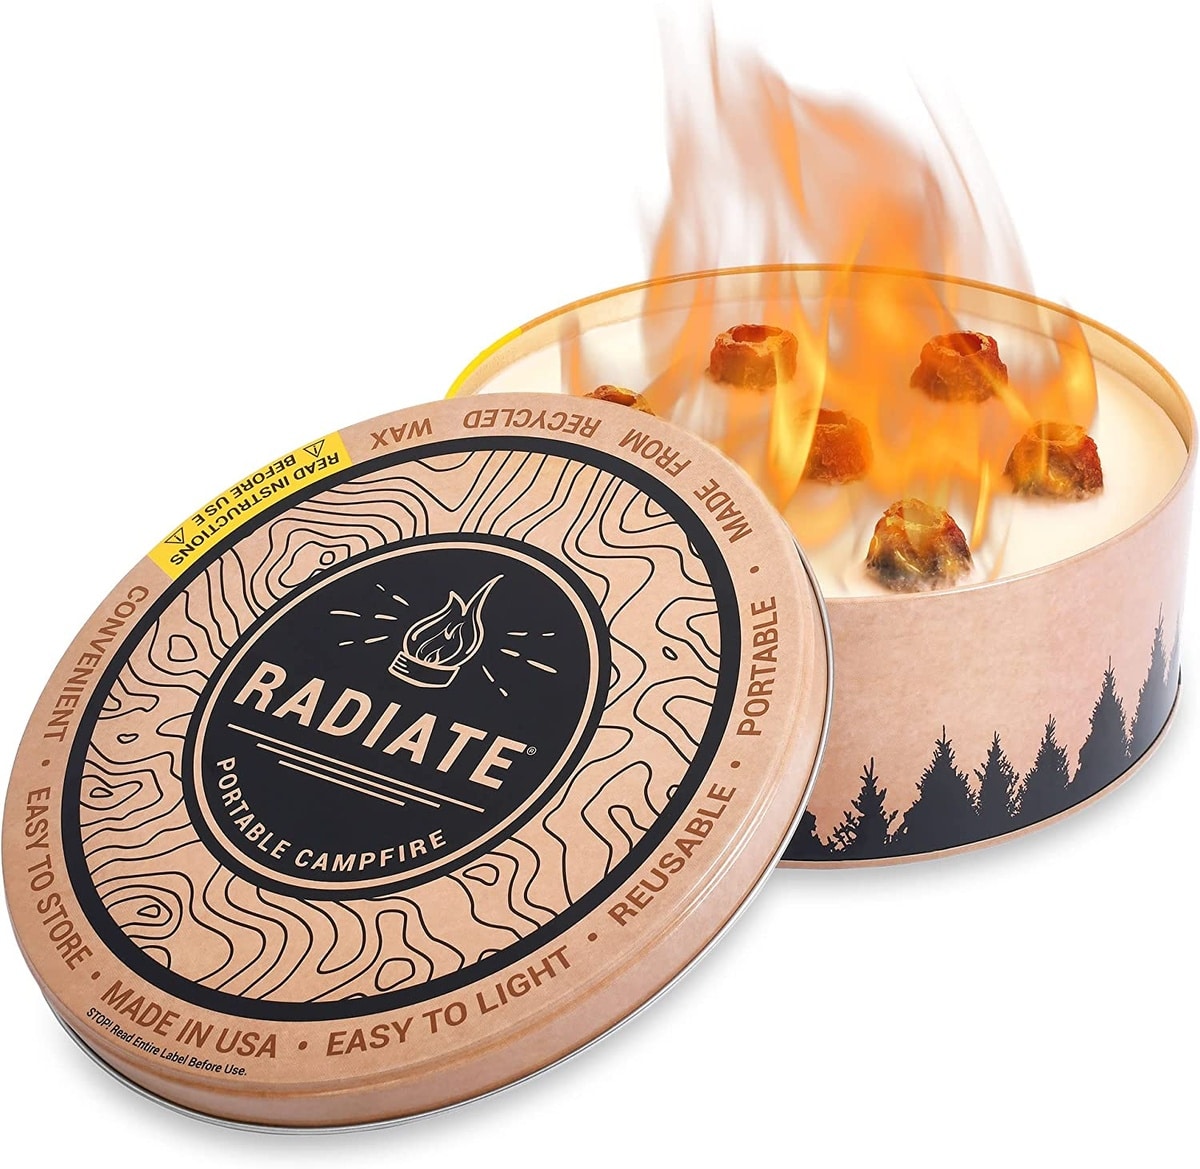 radiate portable fire pit